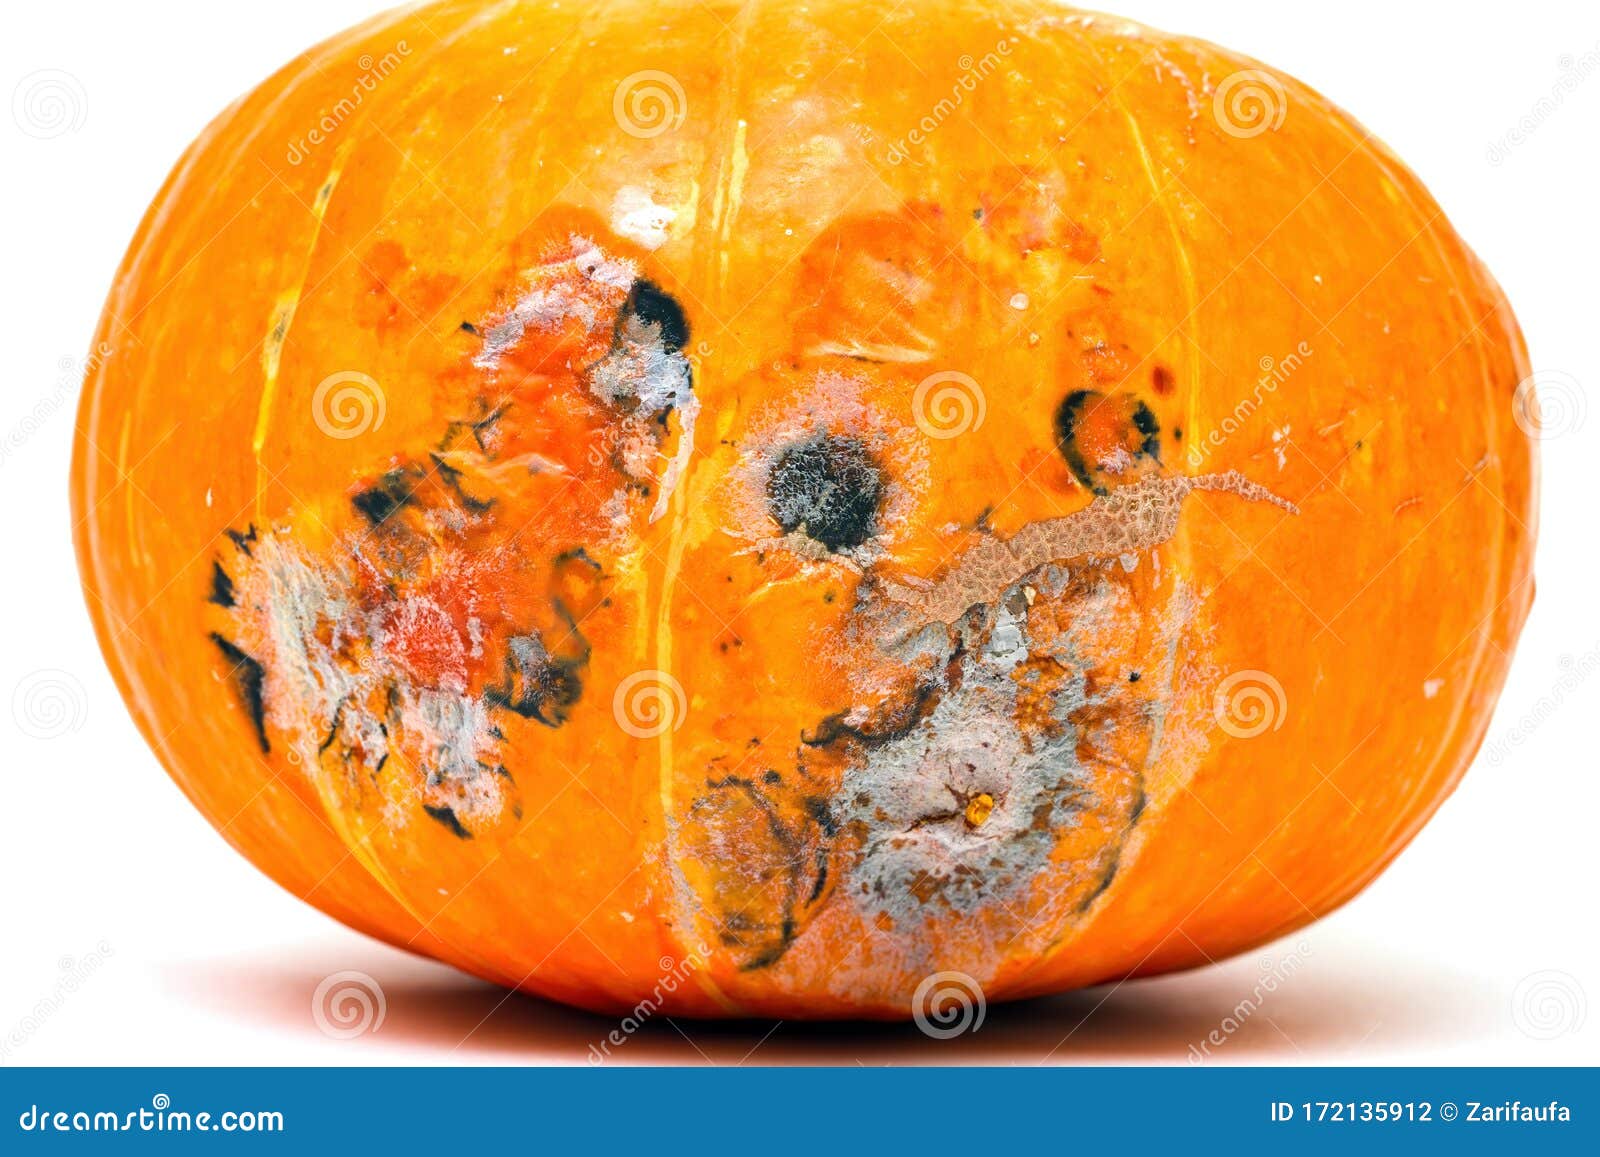 photographer image clipart pumpkin